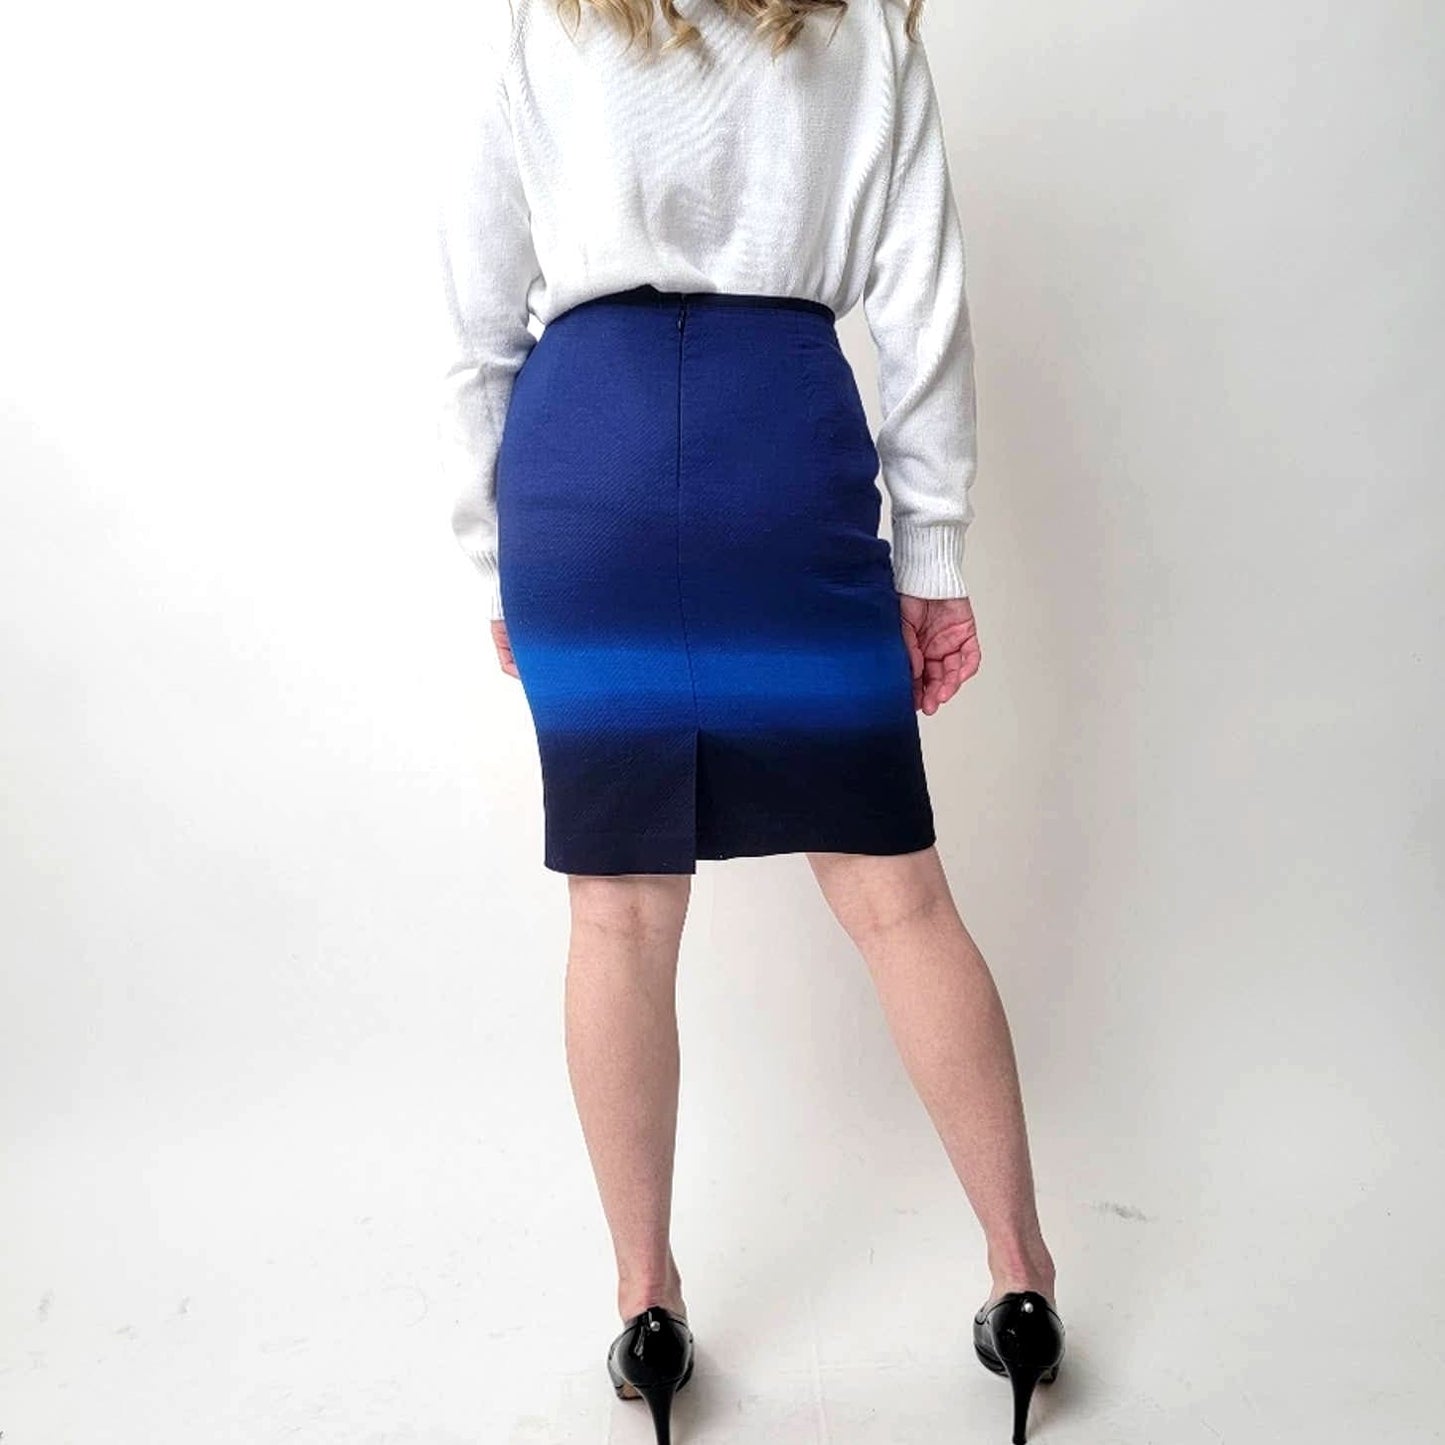 Ann Taylor LOFT Ombre Pencil Skirt - 4P